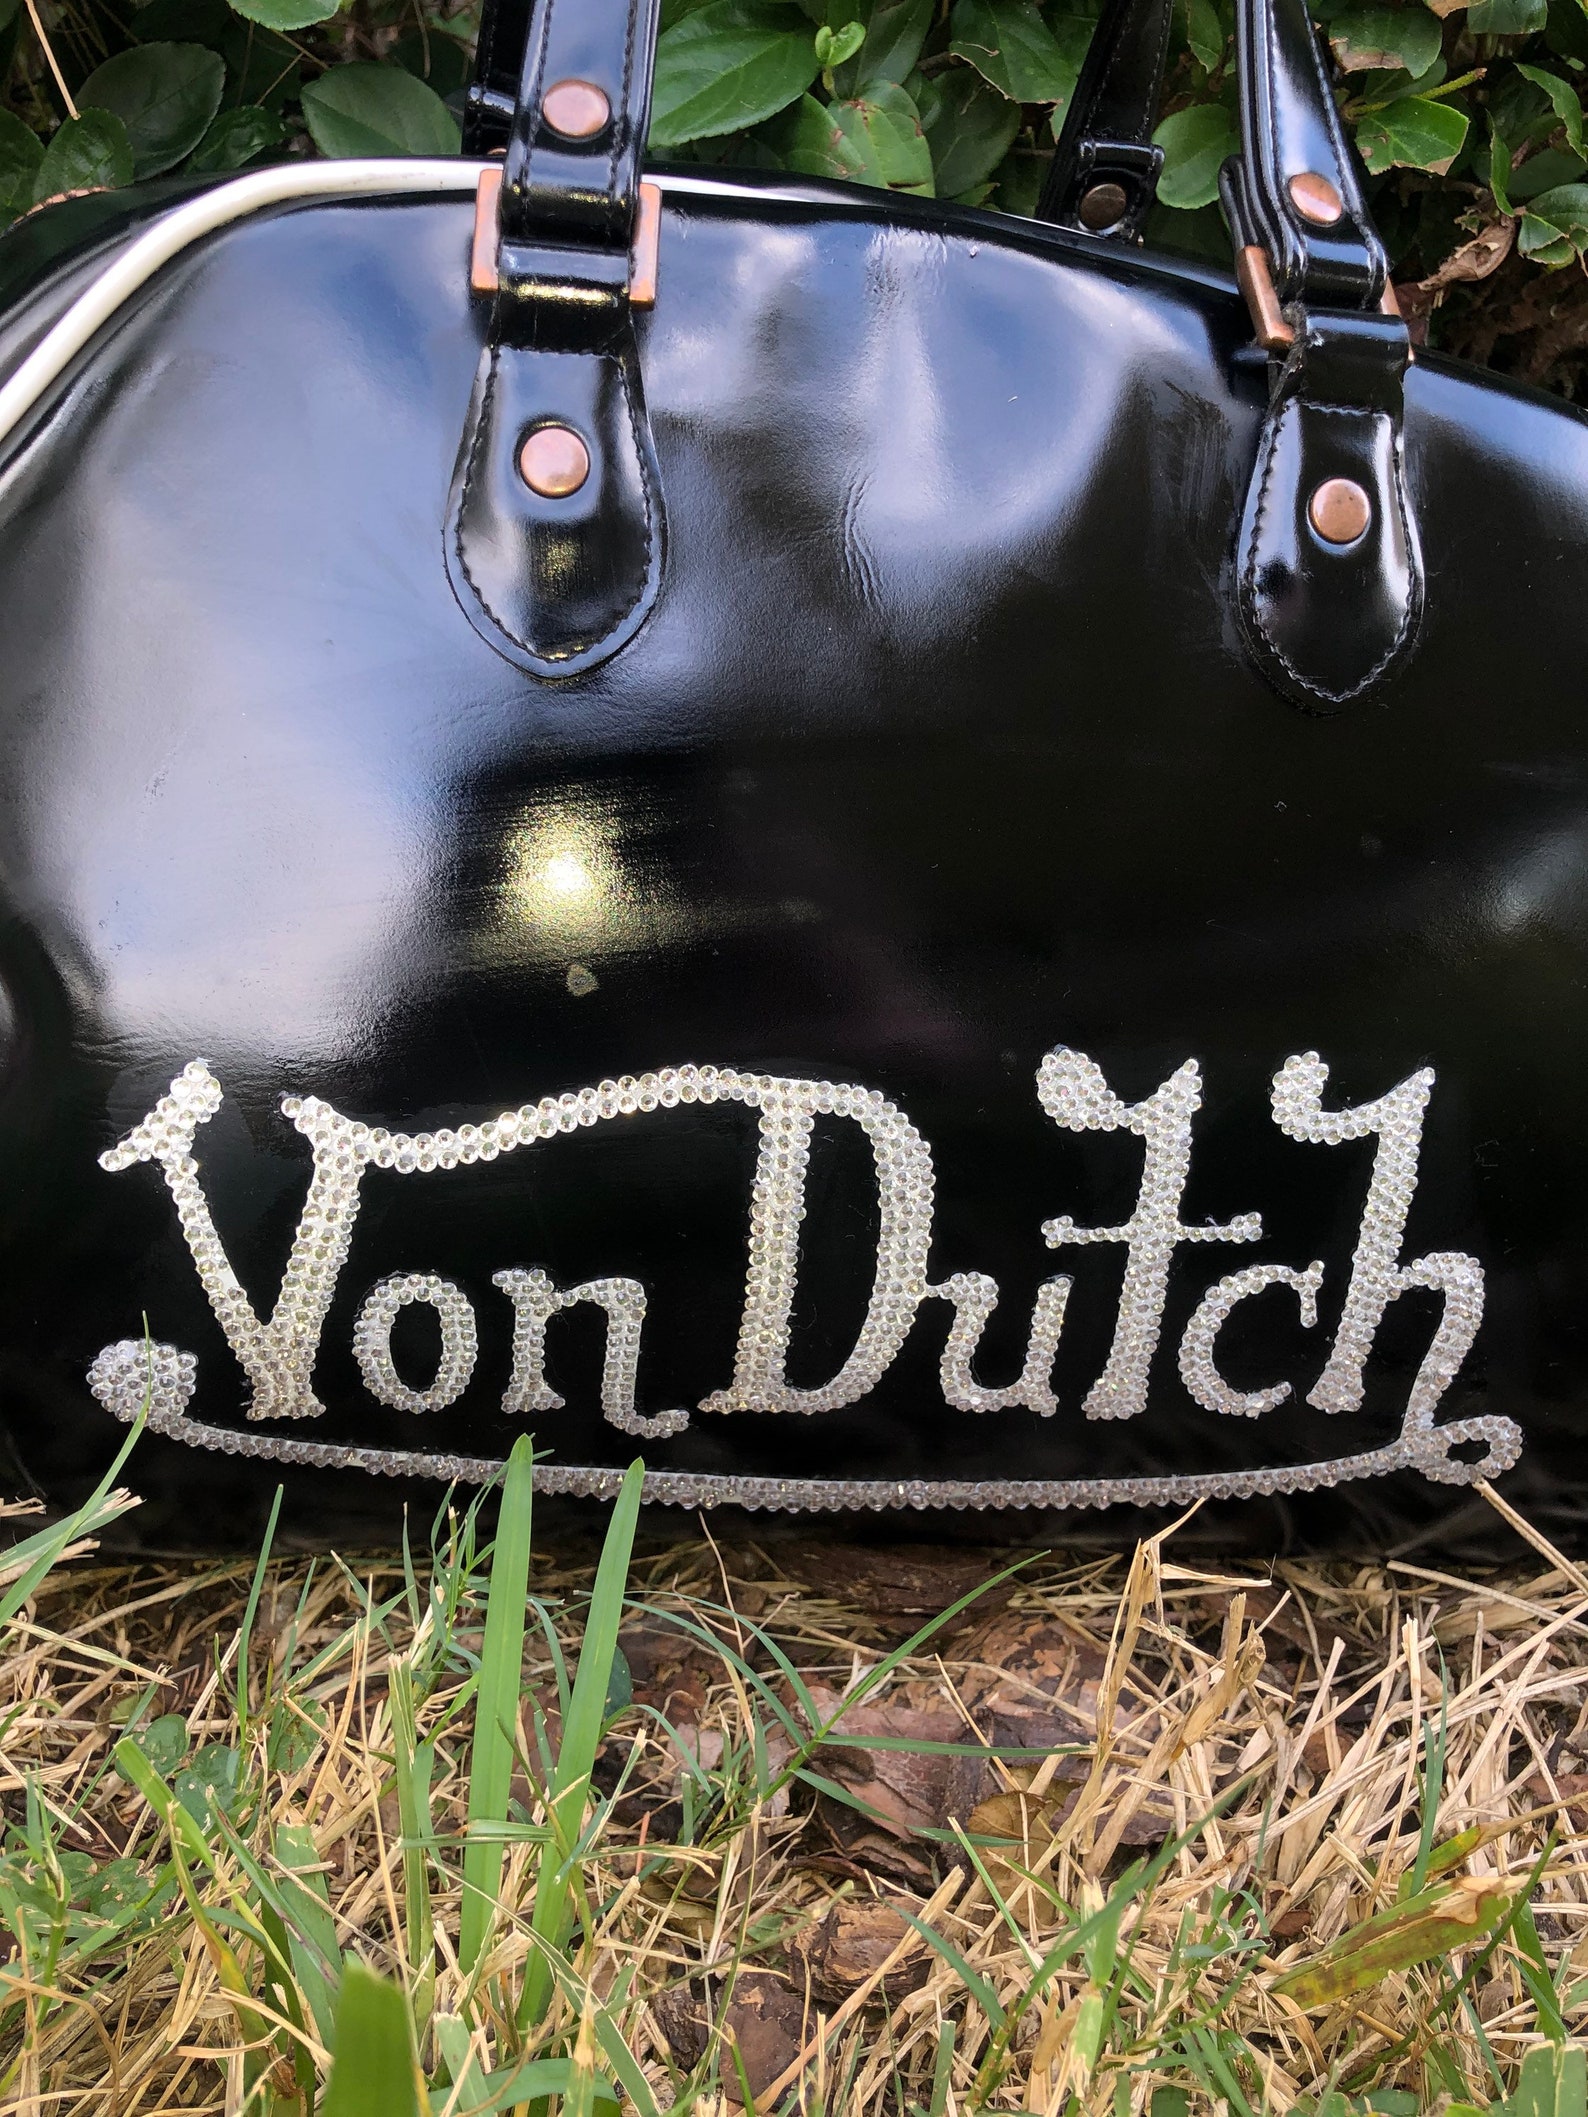 Von Dutch Large Bowler Bag | Etsy